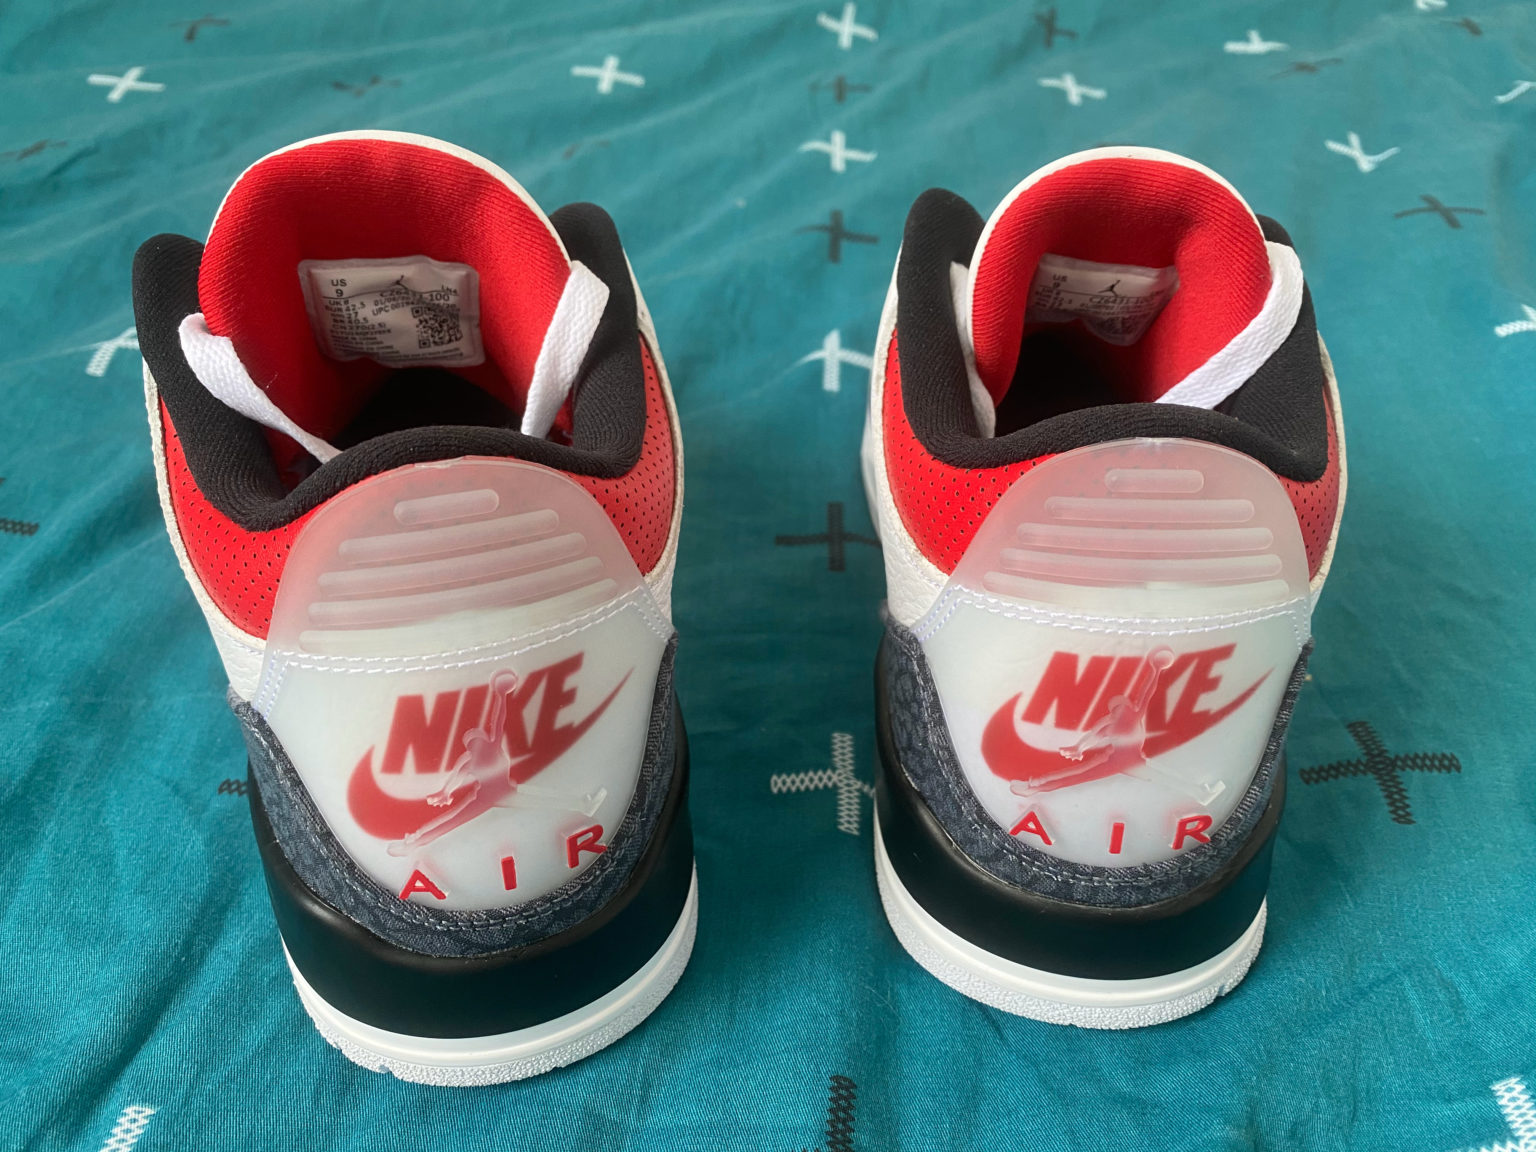 Air Jordan 3 Se Denim Fire Red Cz6431 100 Cz6433 100 Release Date Info Sneakerfiles